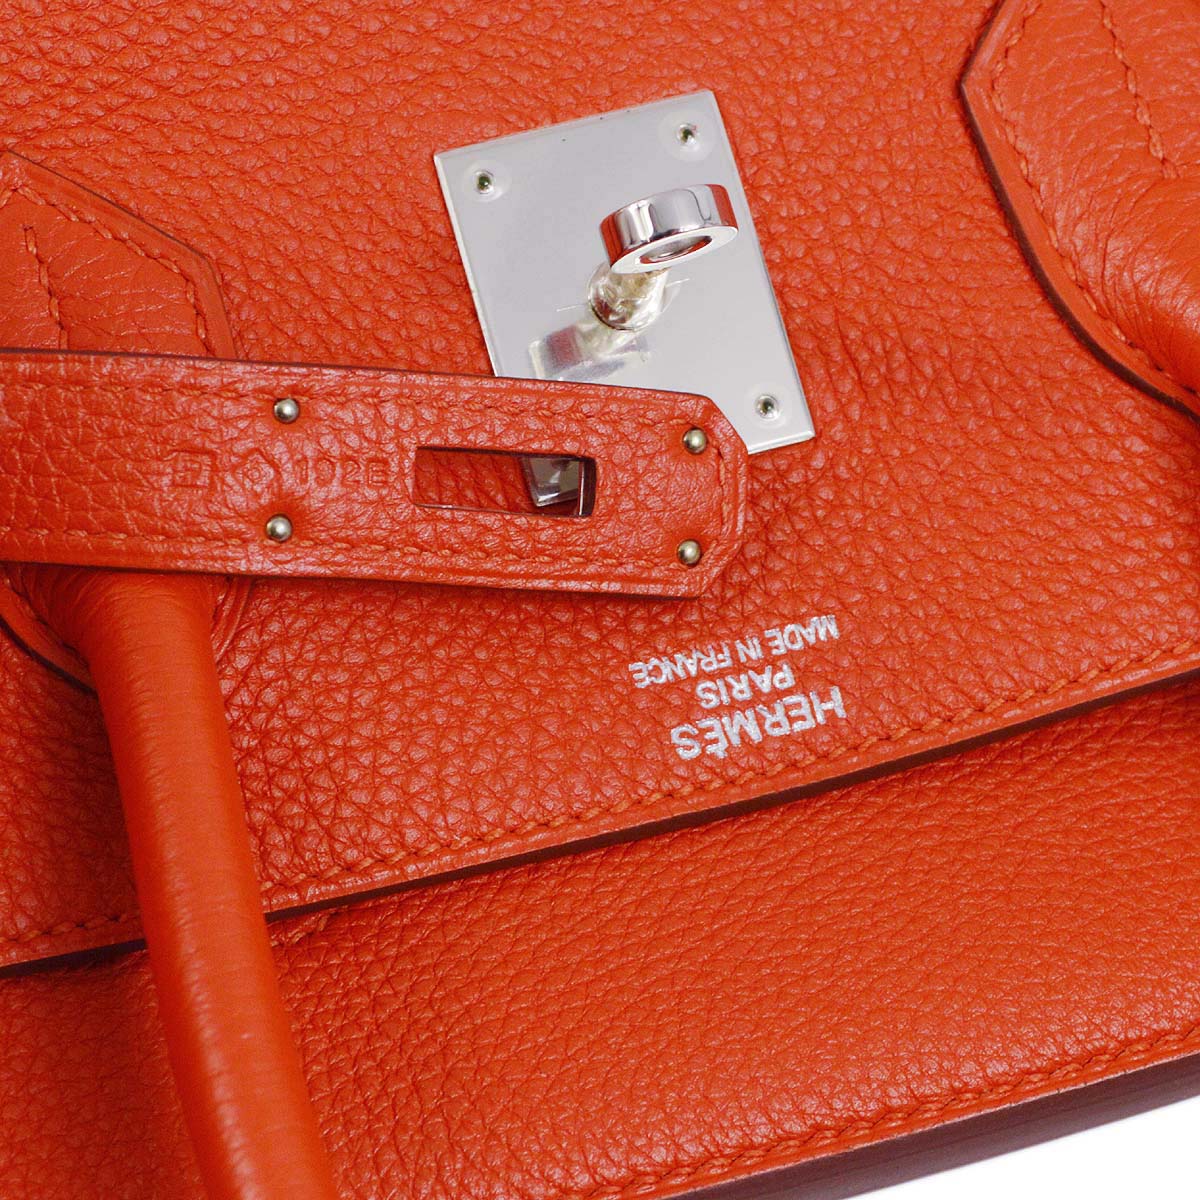 Hermes Red Togo Birkin 35 Handbag